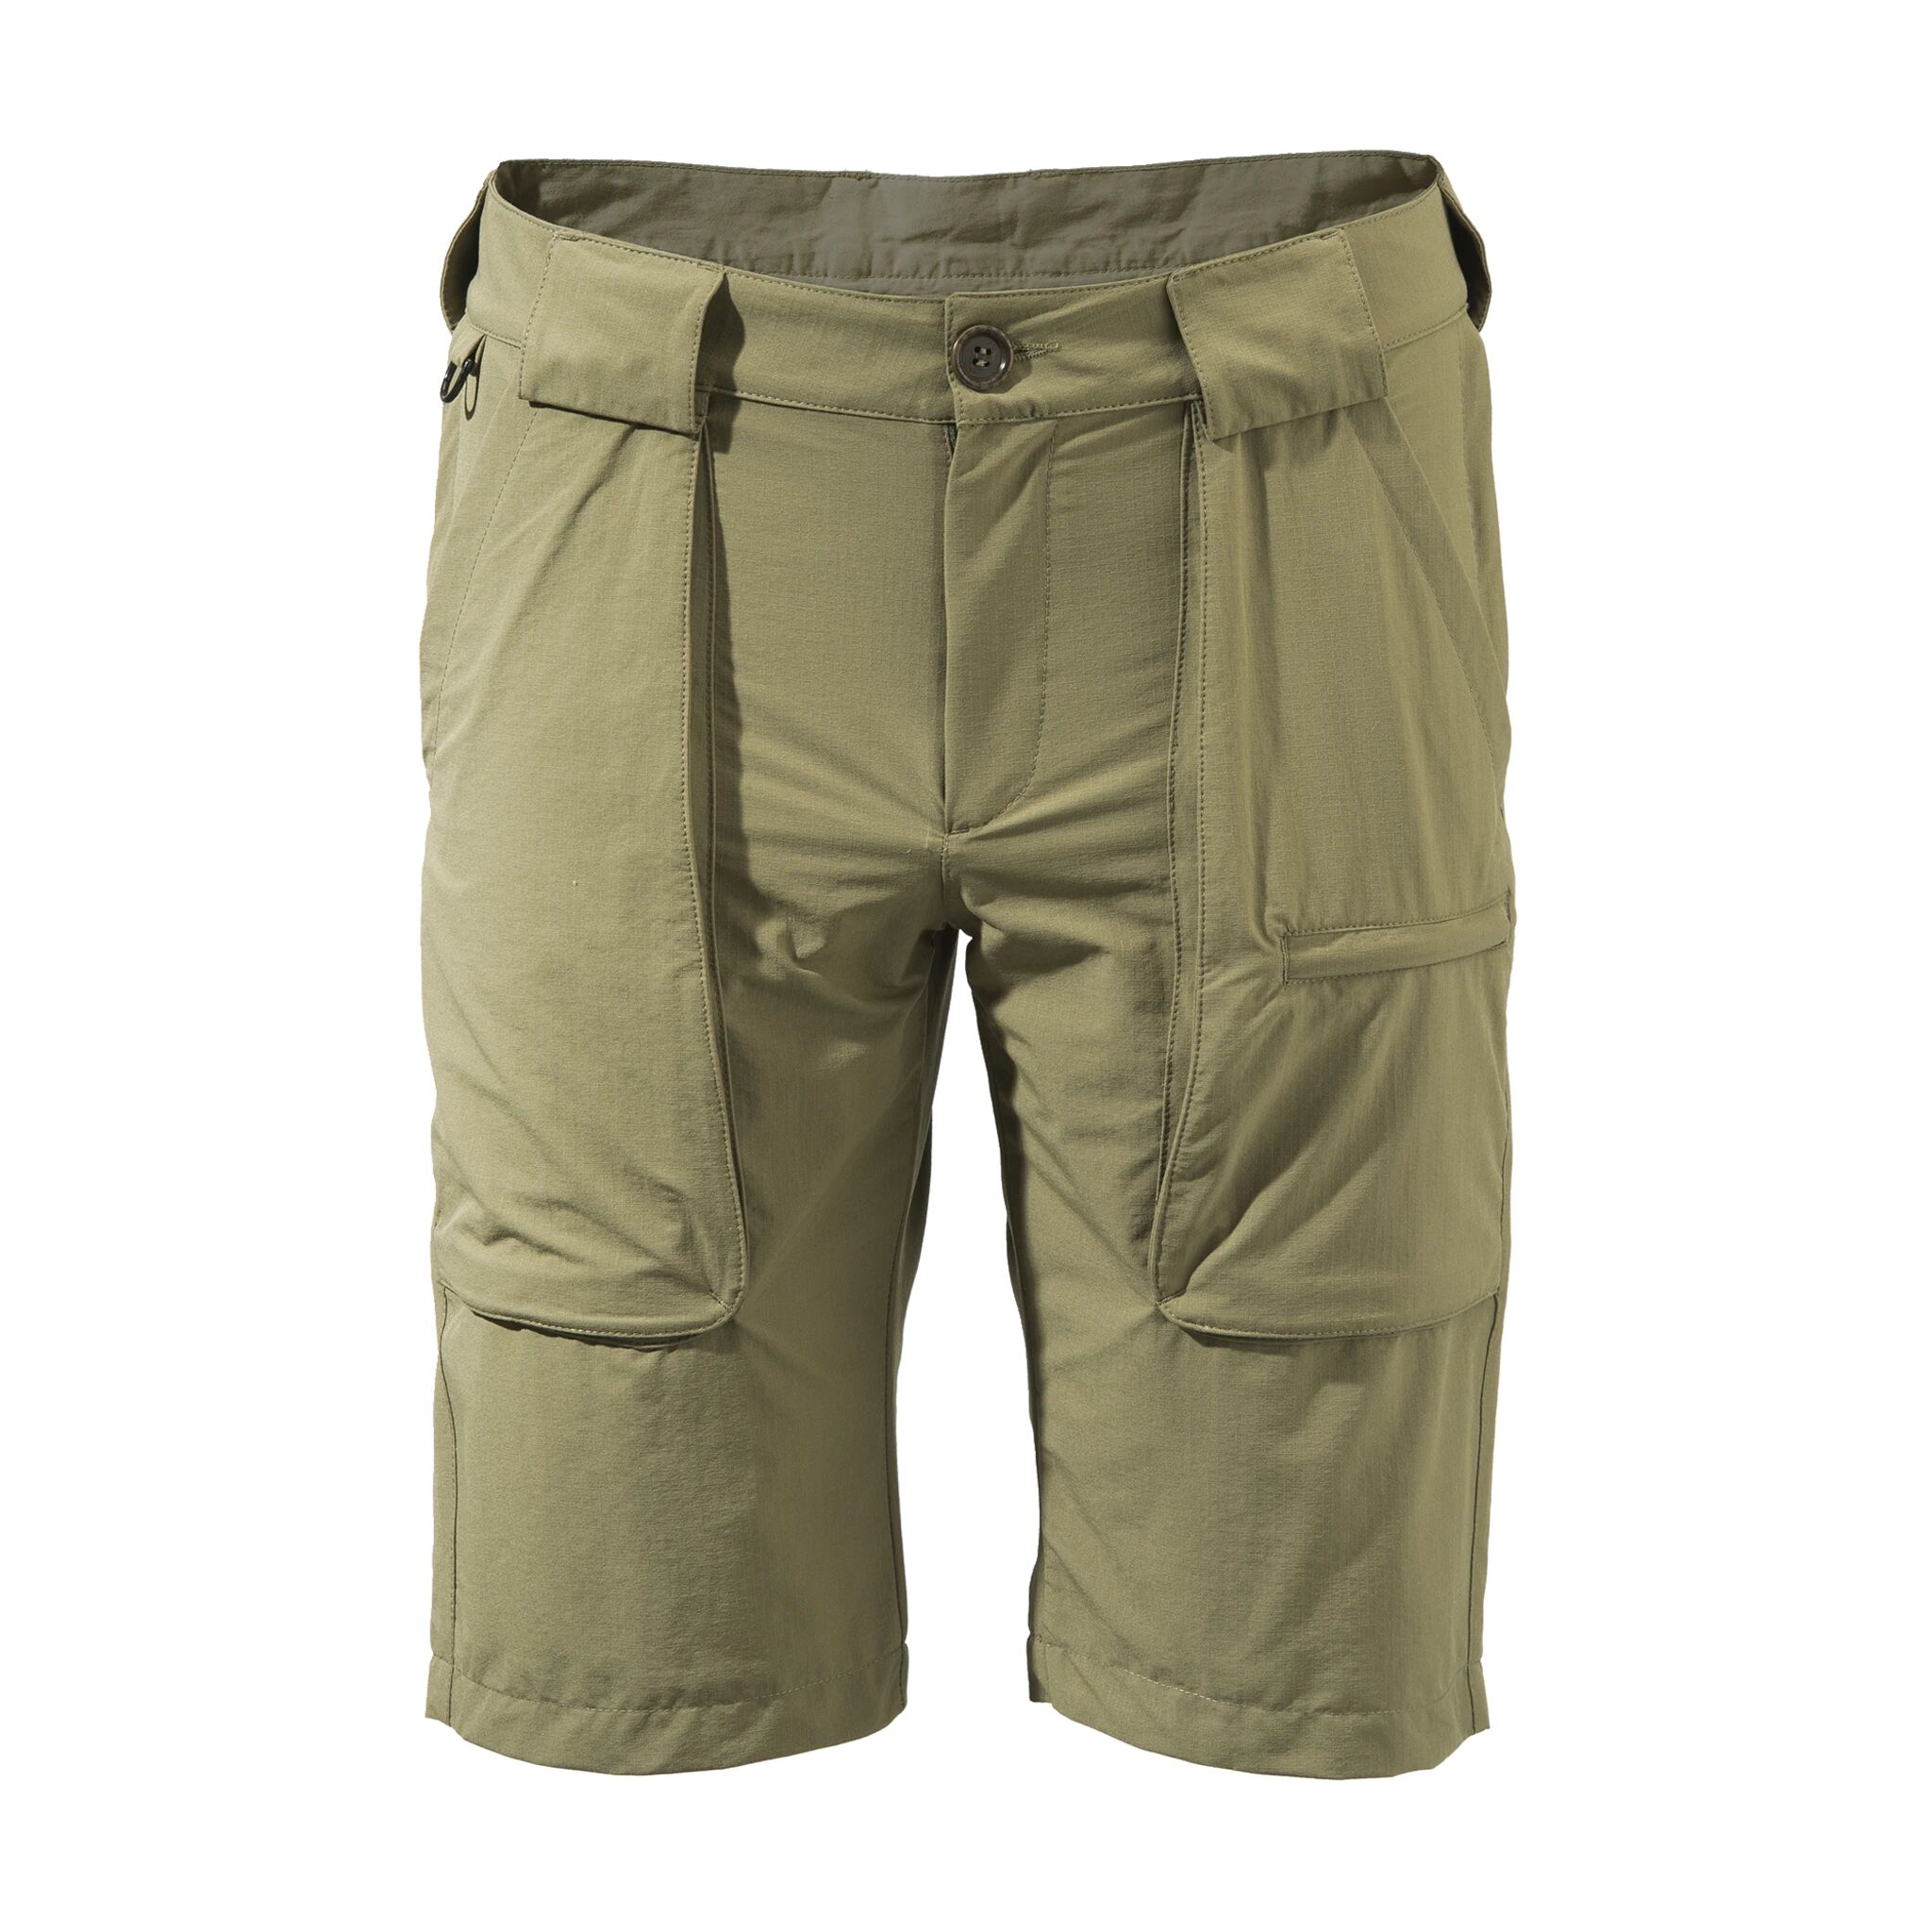 Beretta Man's Bermuda Quick Dry, shorts S Beige